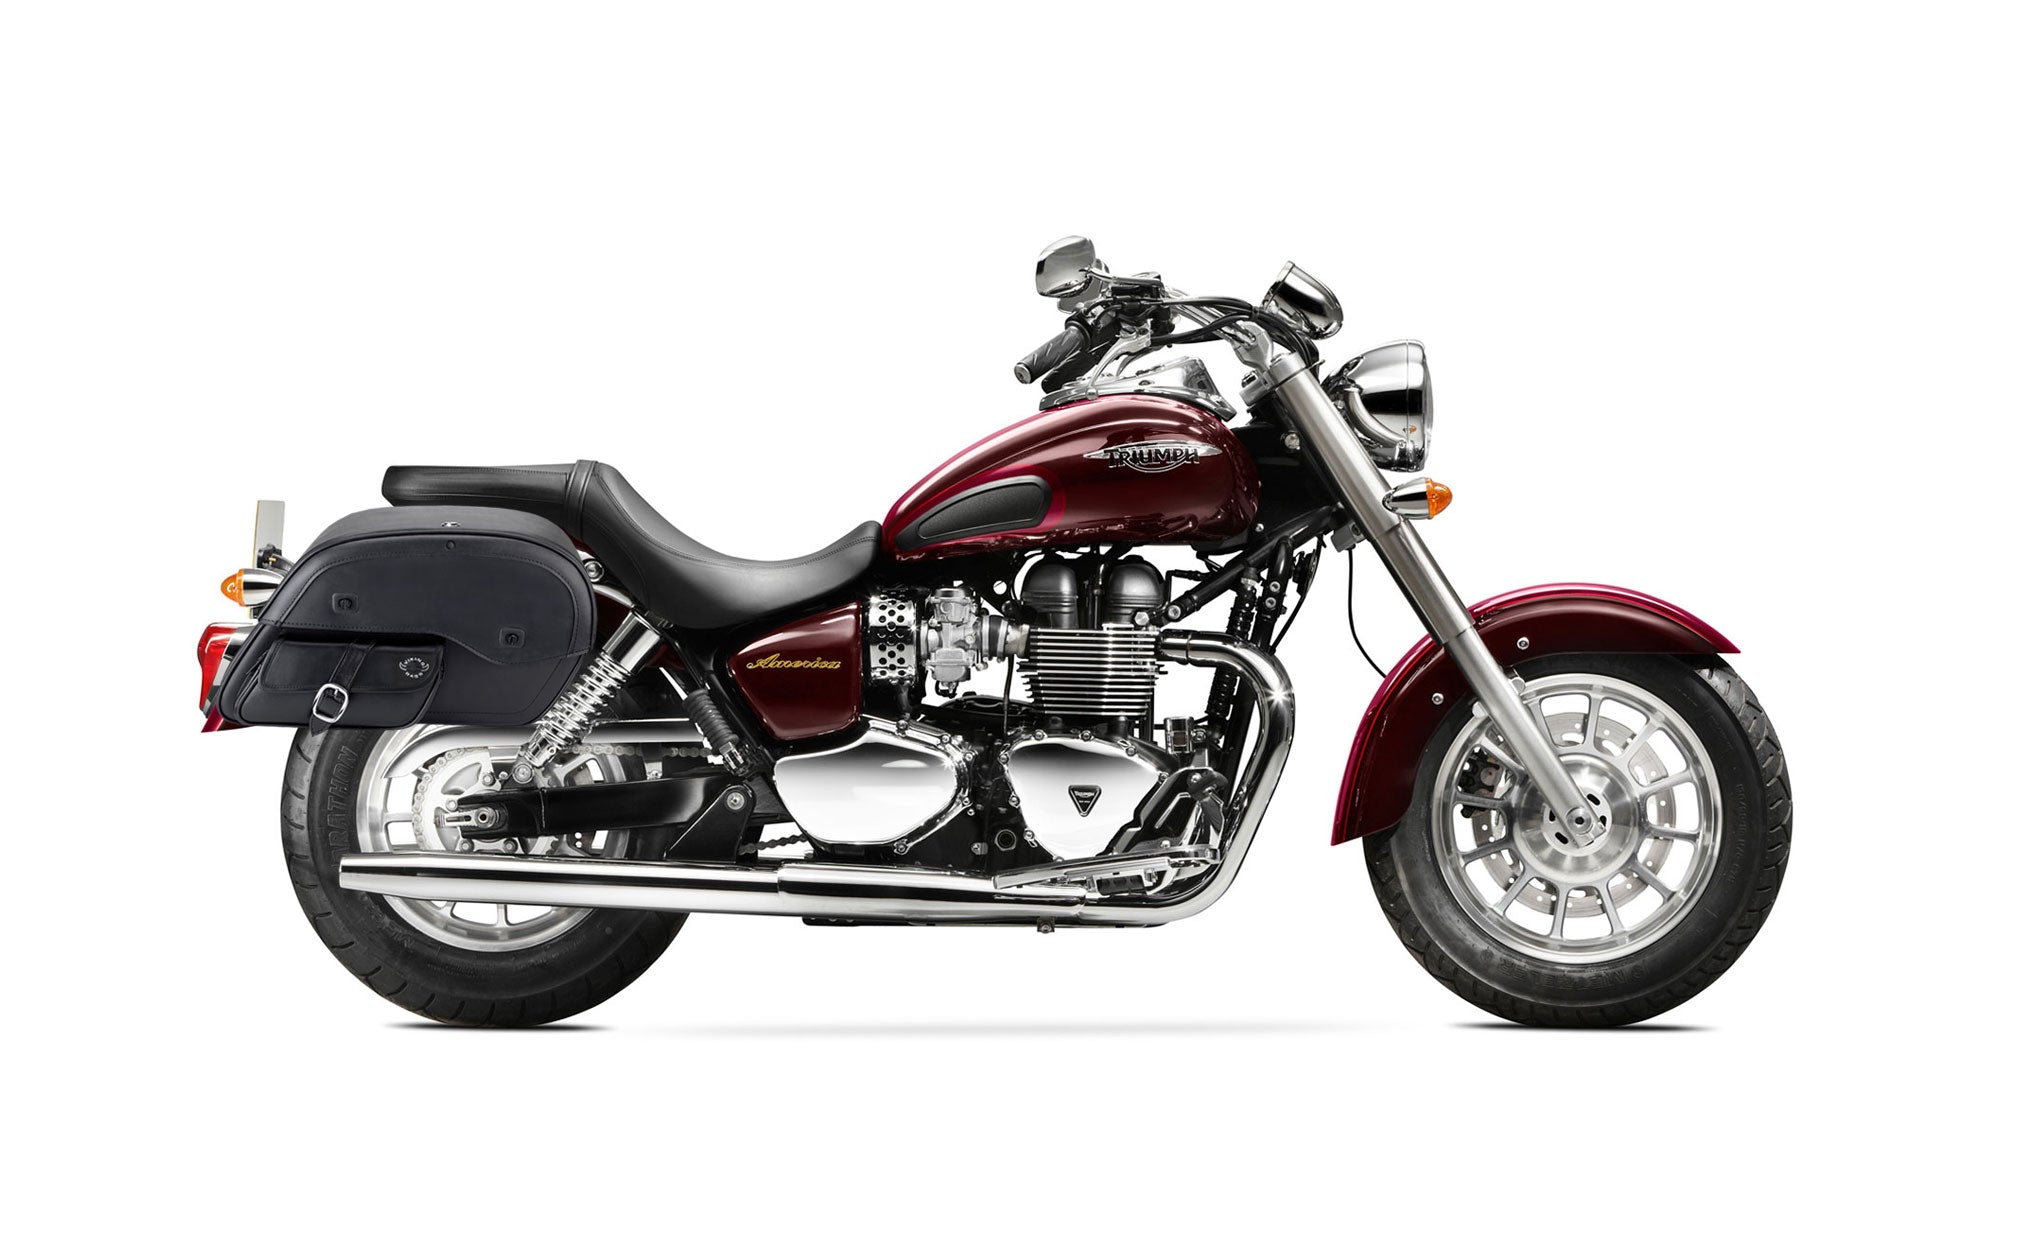 Viking Essential Side Pocket Large Triumph America Leather Motorcycle Saddlebags on Bike Photo @expand